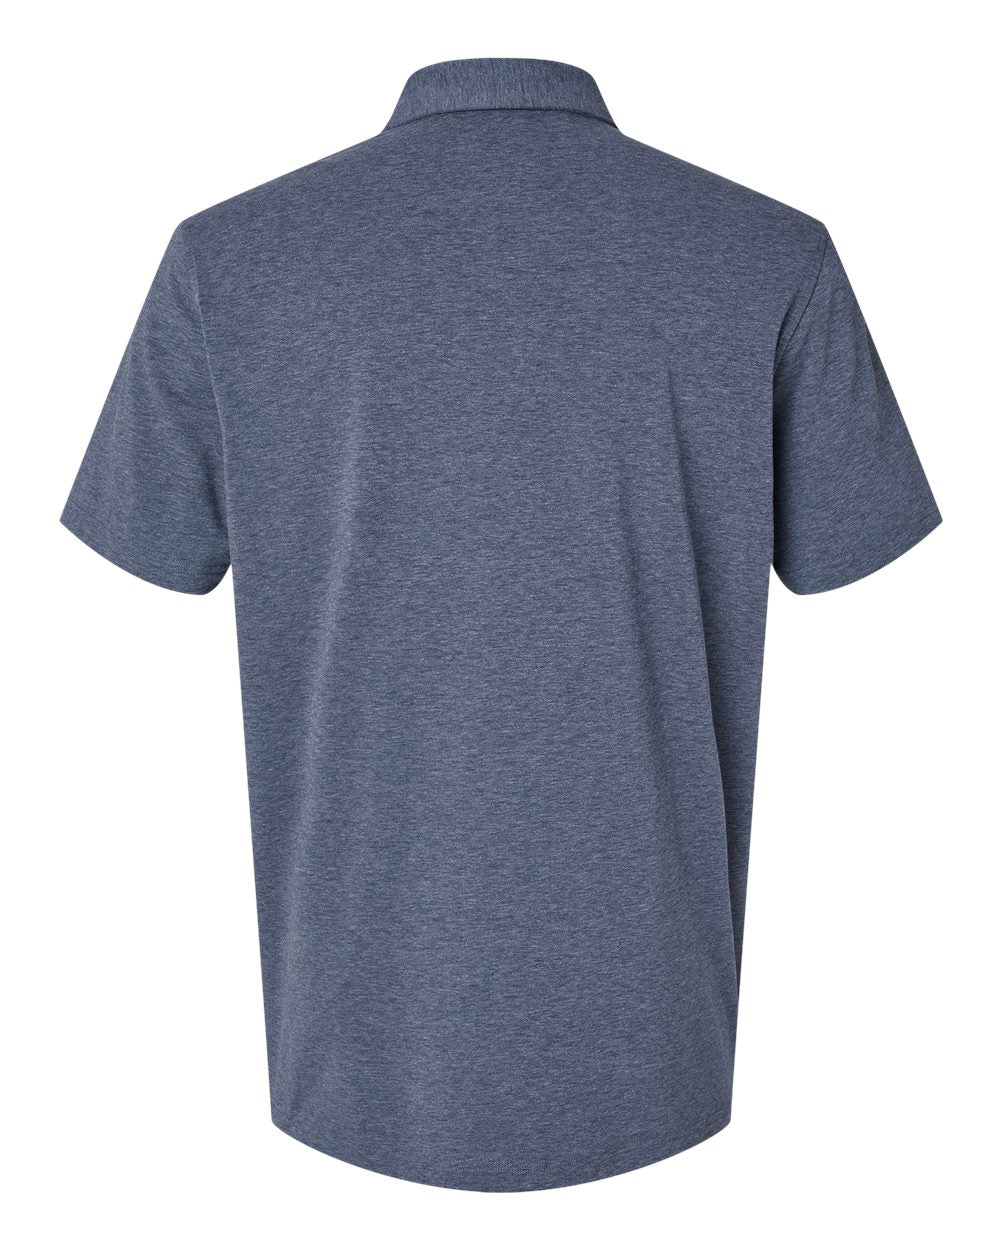 Adidas A590 Blend Polo T-Shirt #color_Collegiate Navy Melange